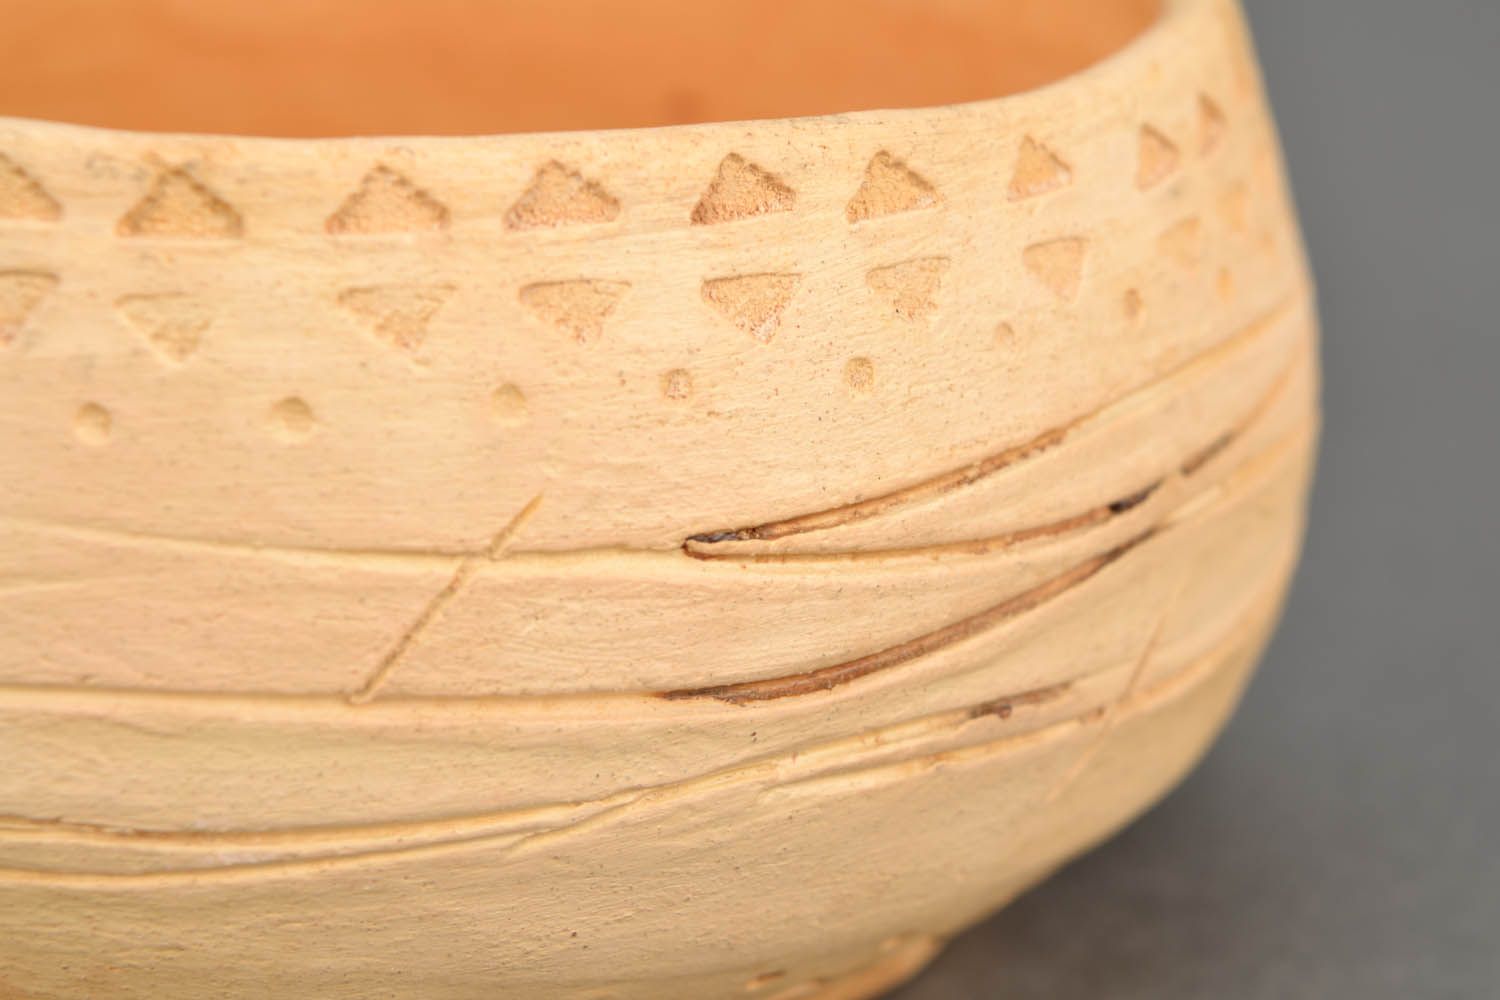 6 10 oz ceramic pitch bowl or ceramic bowl vase great handmade pottery 1 lb photo 5